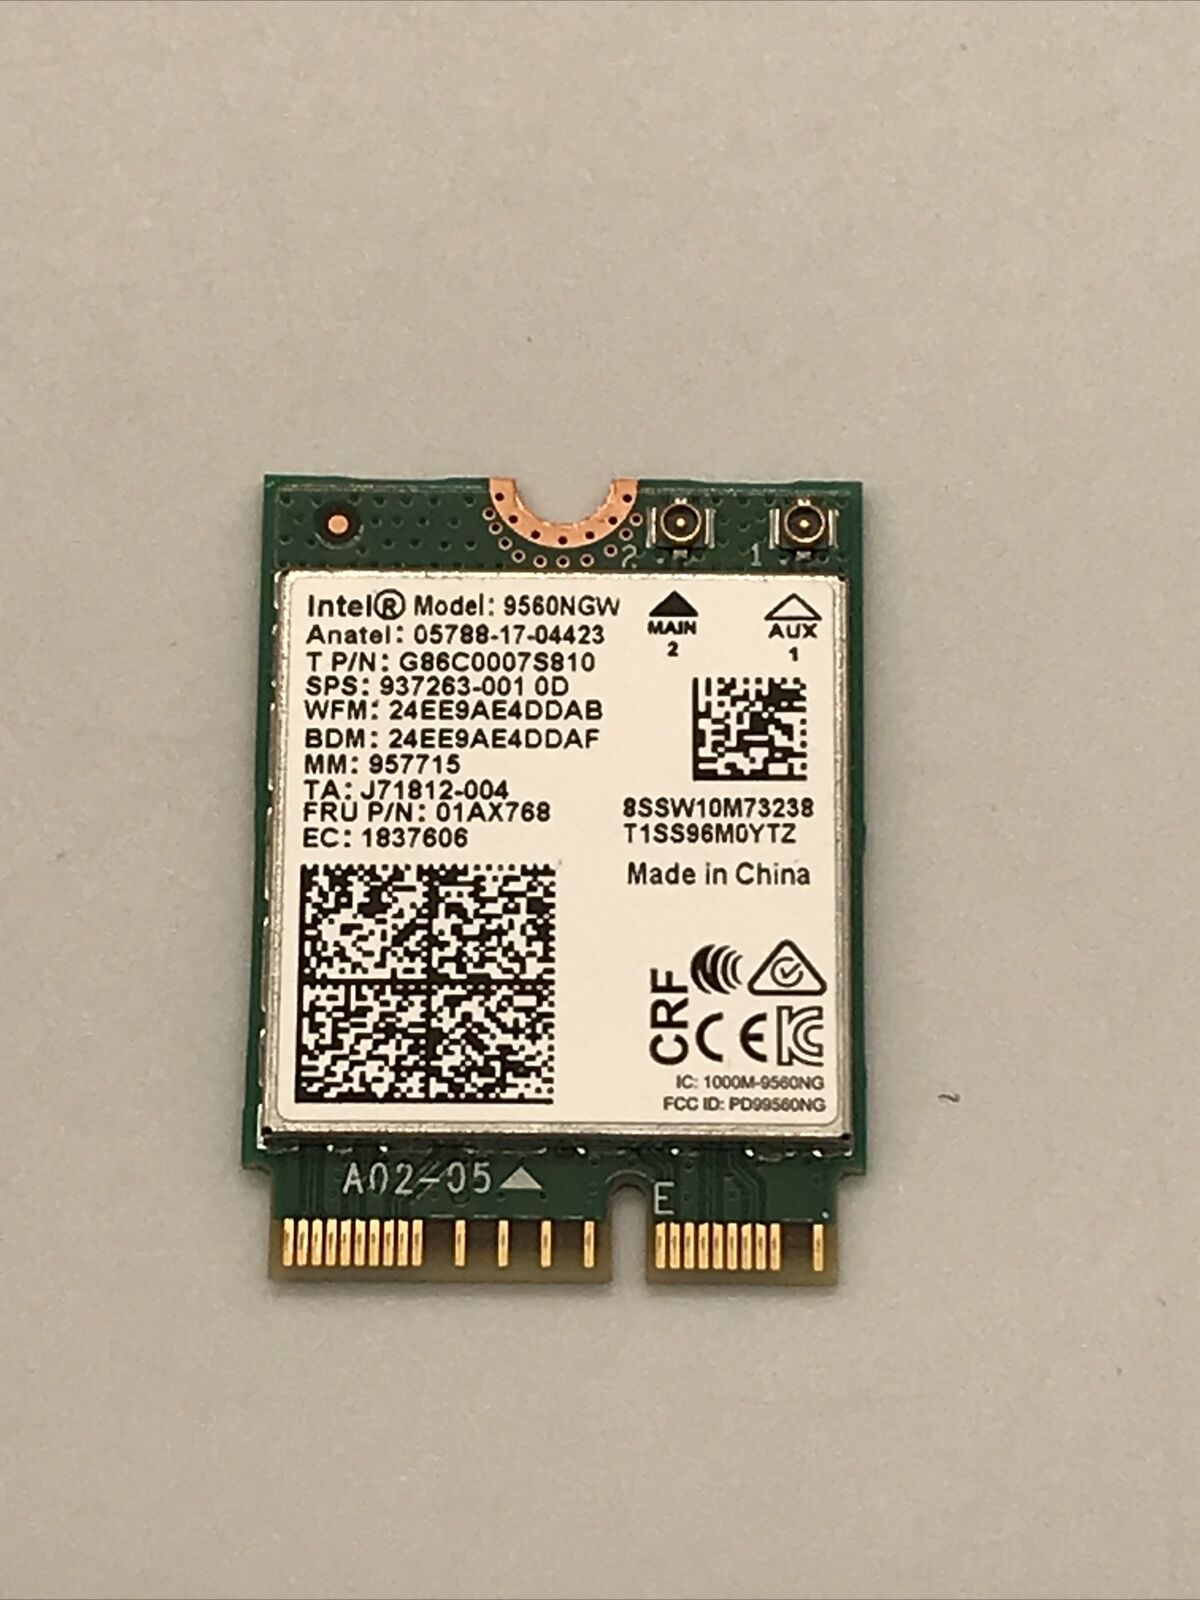 Intel Dual-Band Wireless N 9560 WiFi Card Model 9560NGW